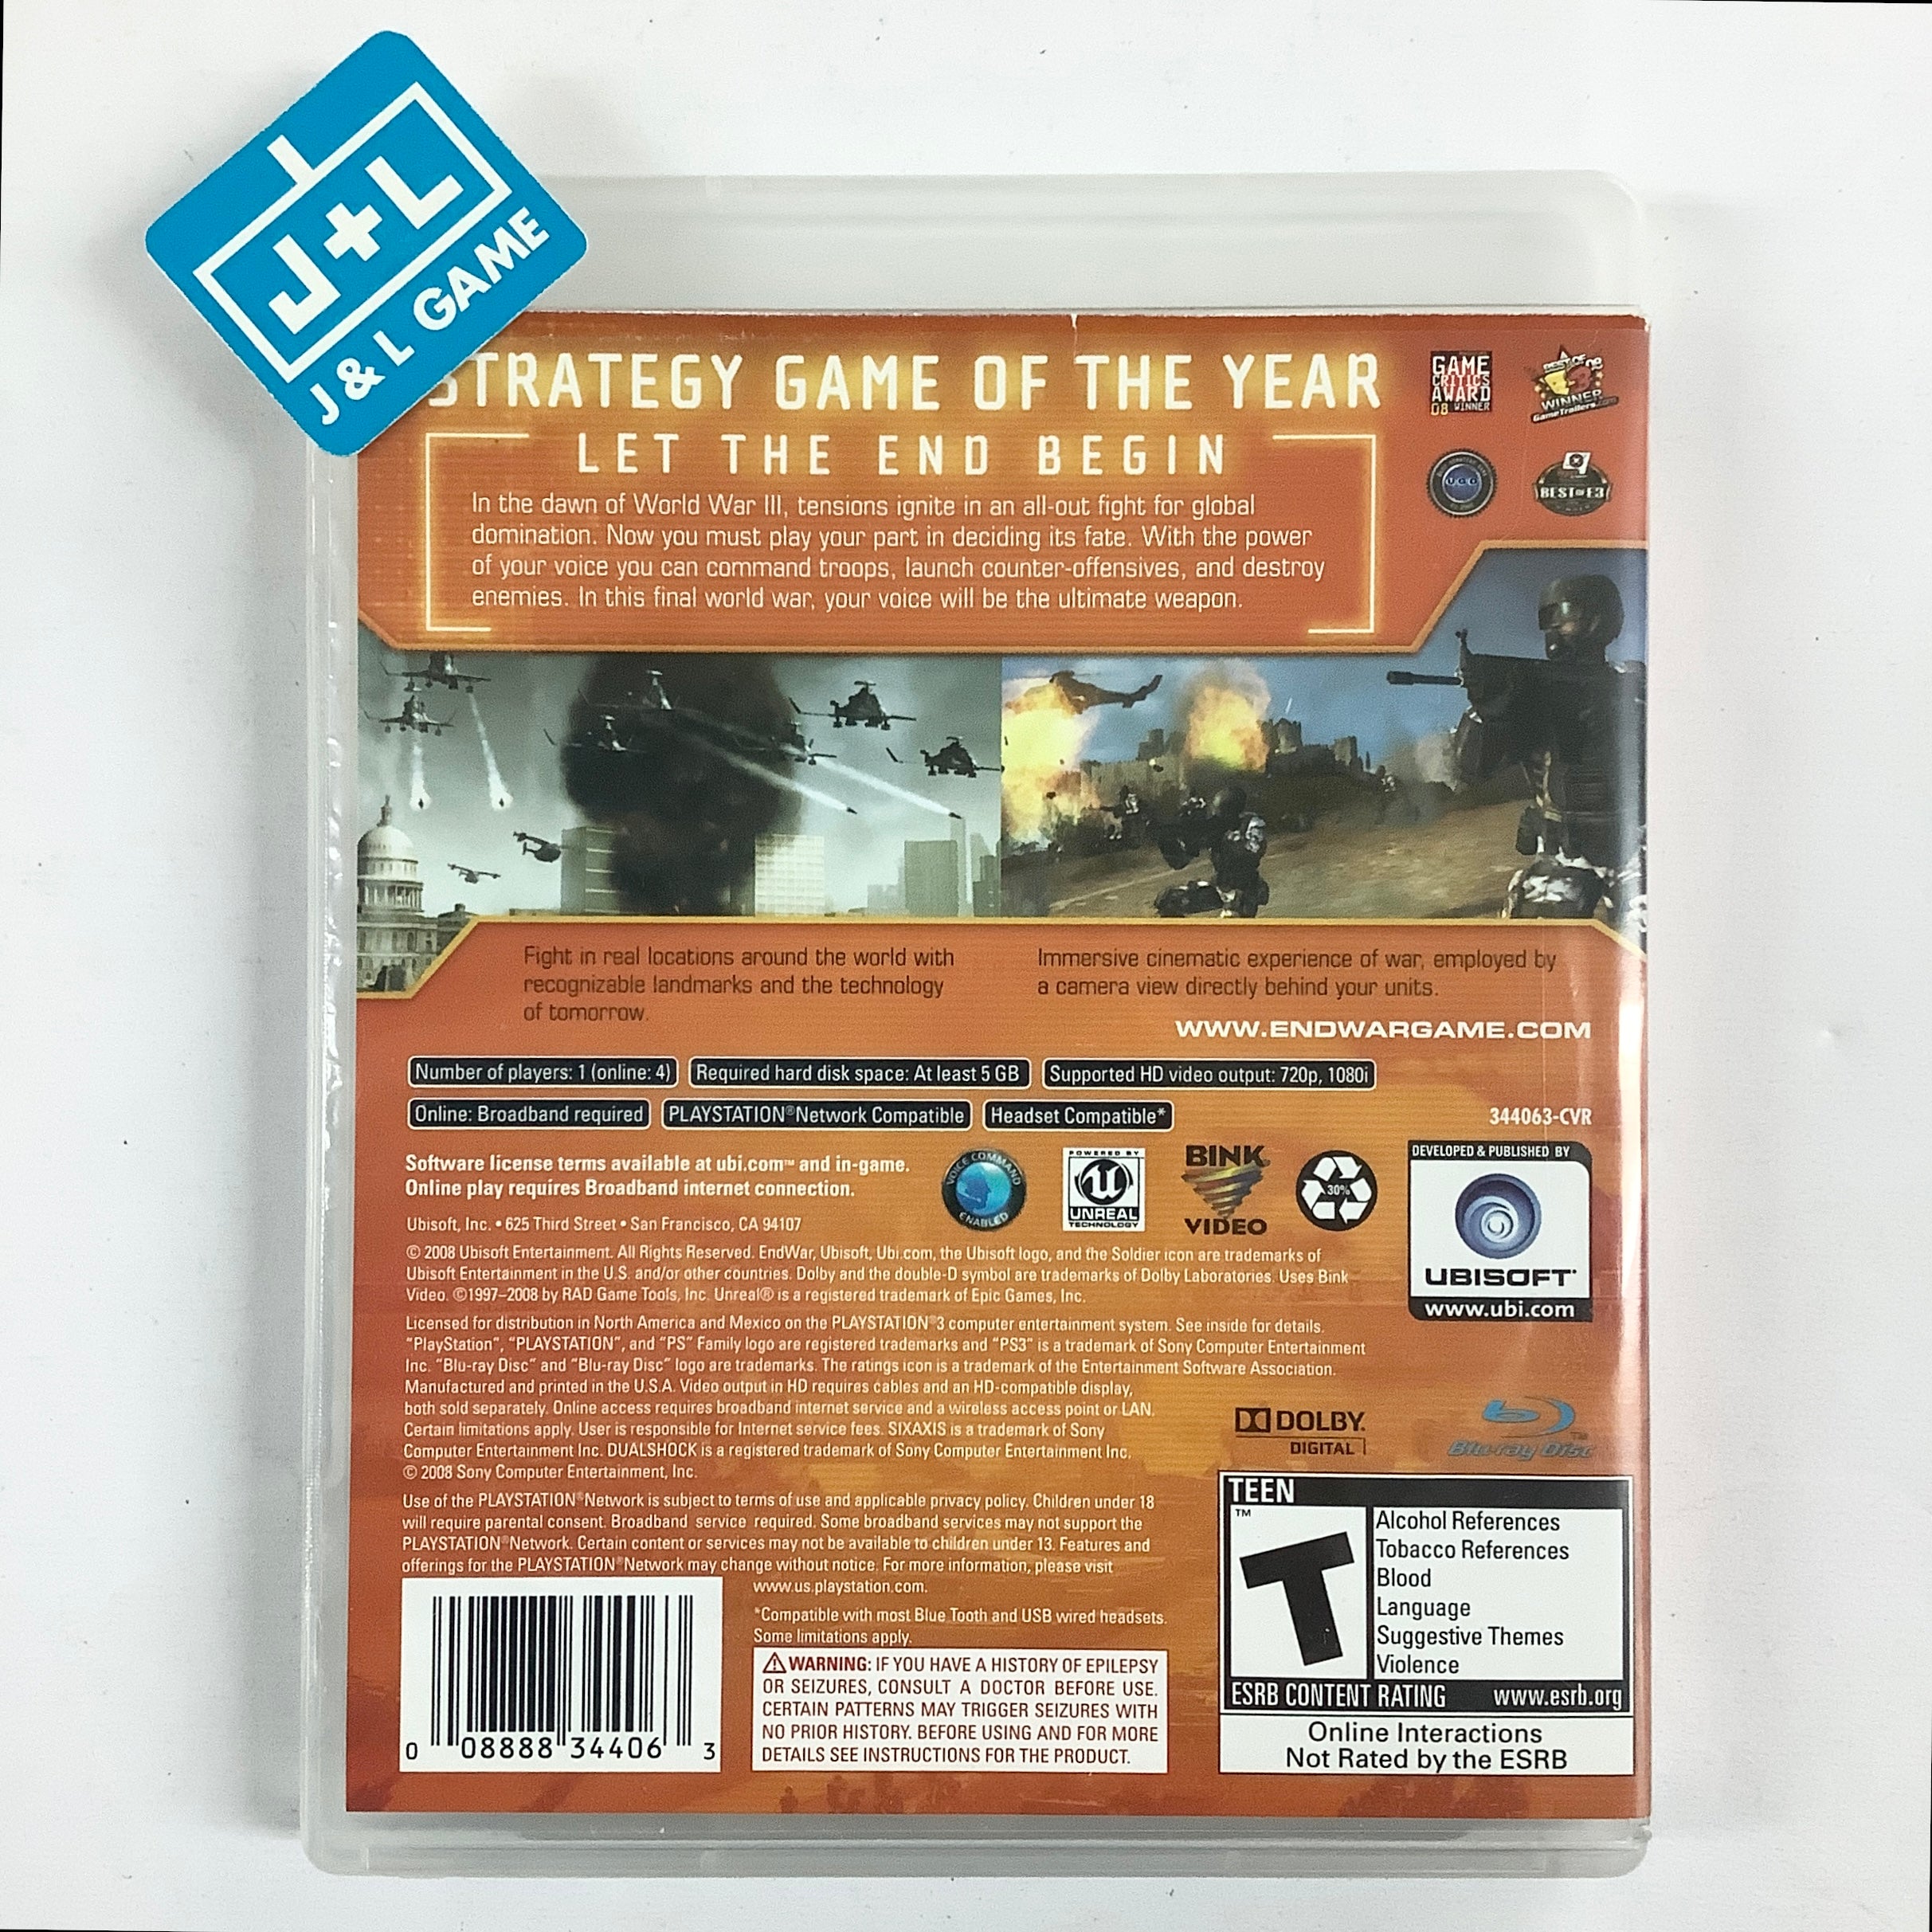 Tom Clancy's EndWar - (PS3) PlayStation 3 [Pre-Owned] Video Games Ubisoft   